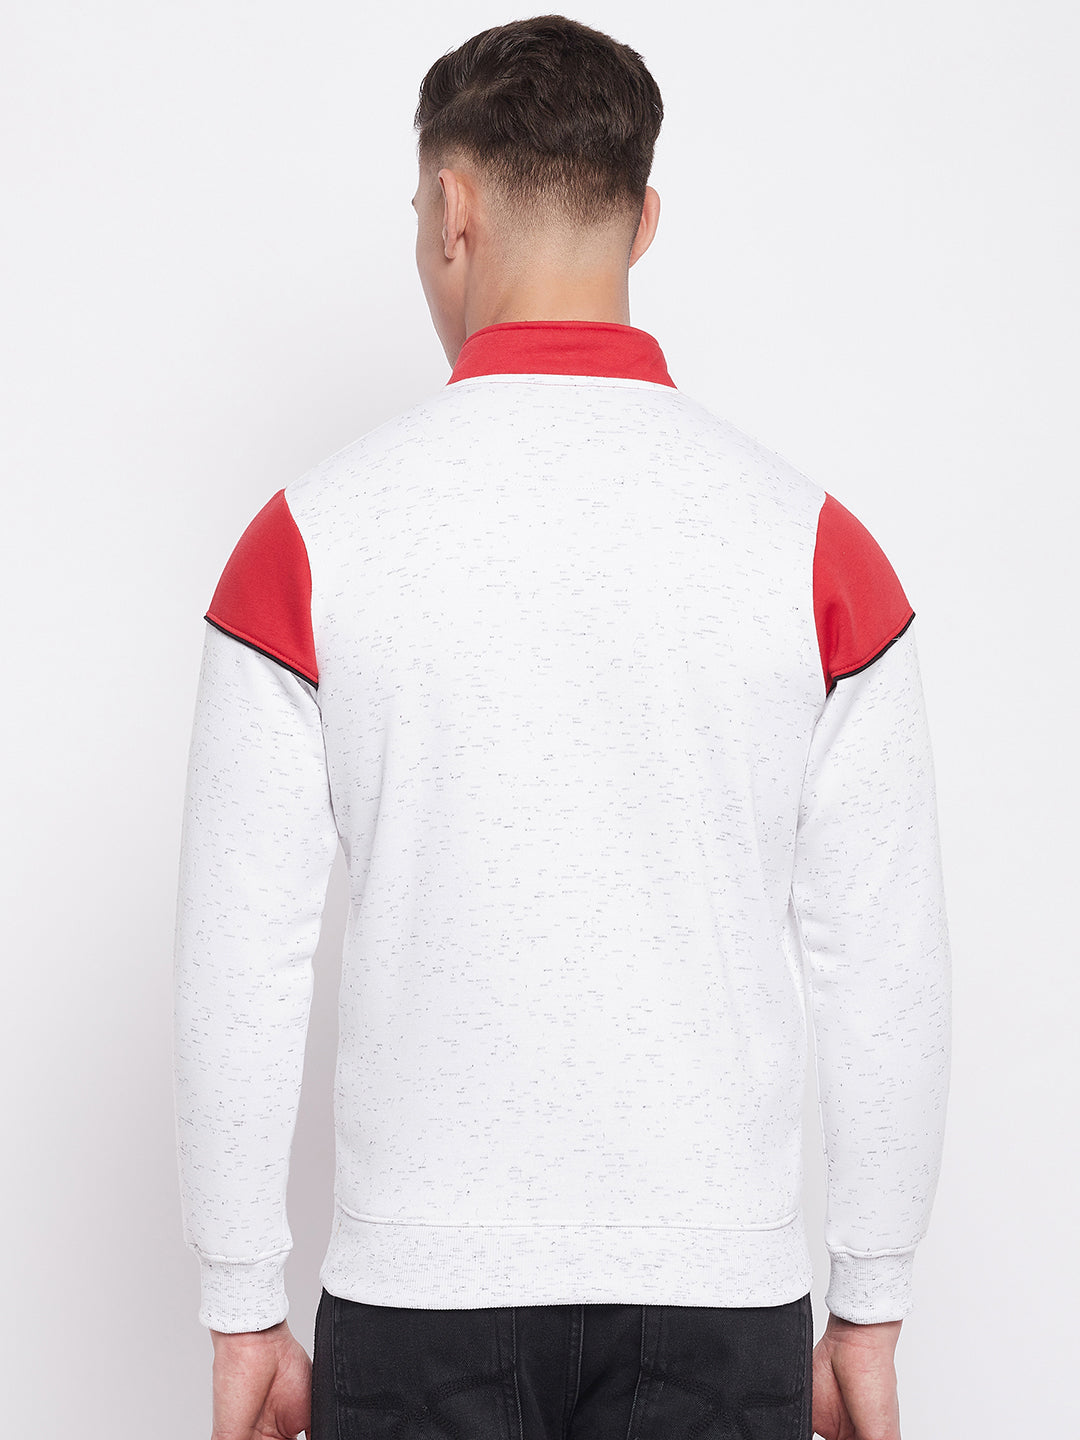 Livfree Mens Full Zipper Vertical Chest Print Cut & Sew Sweatshirt